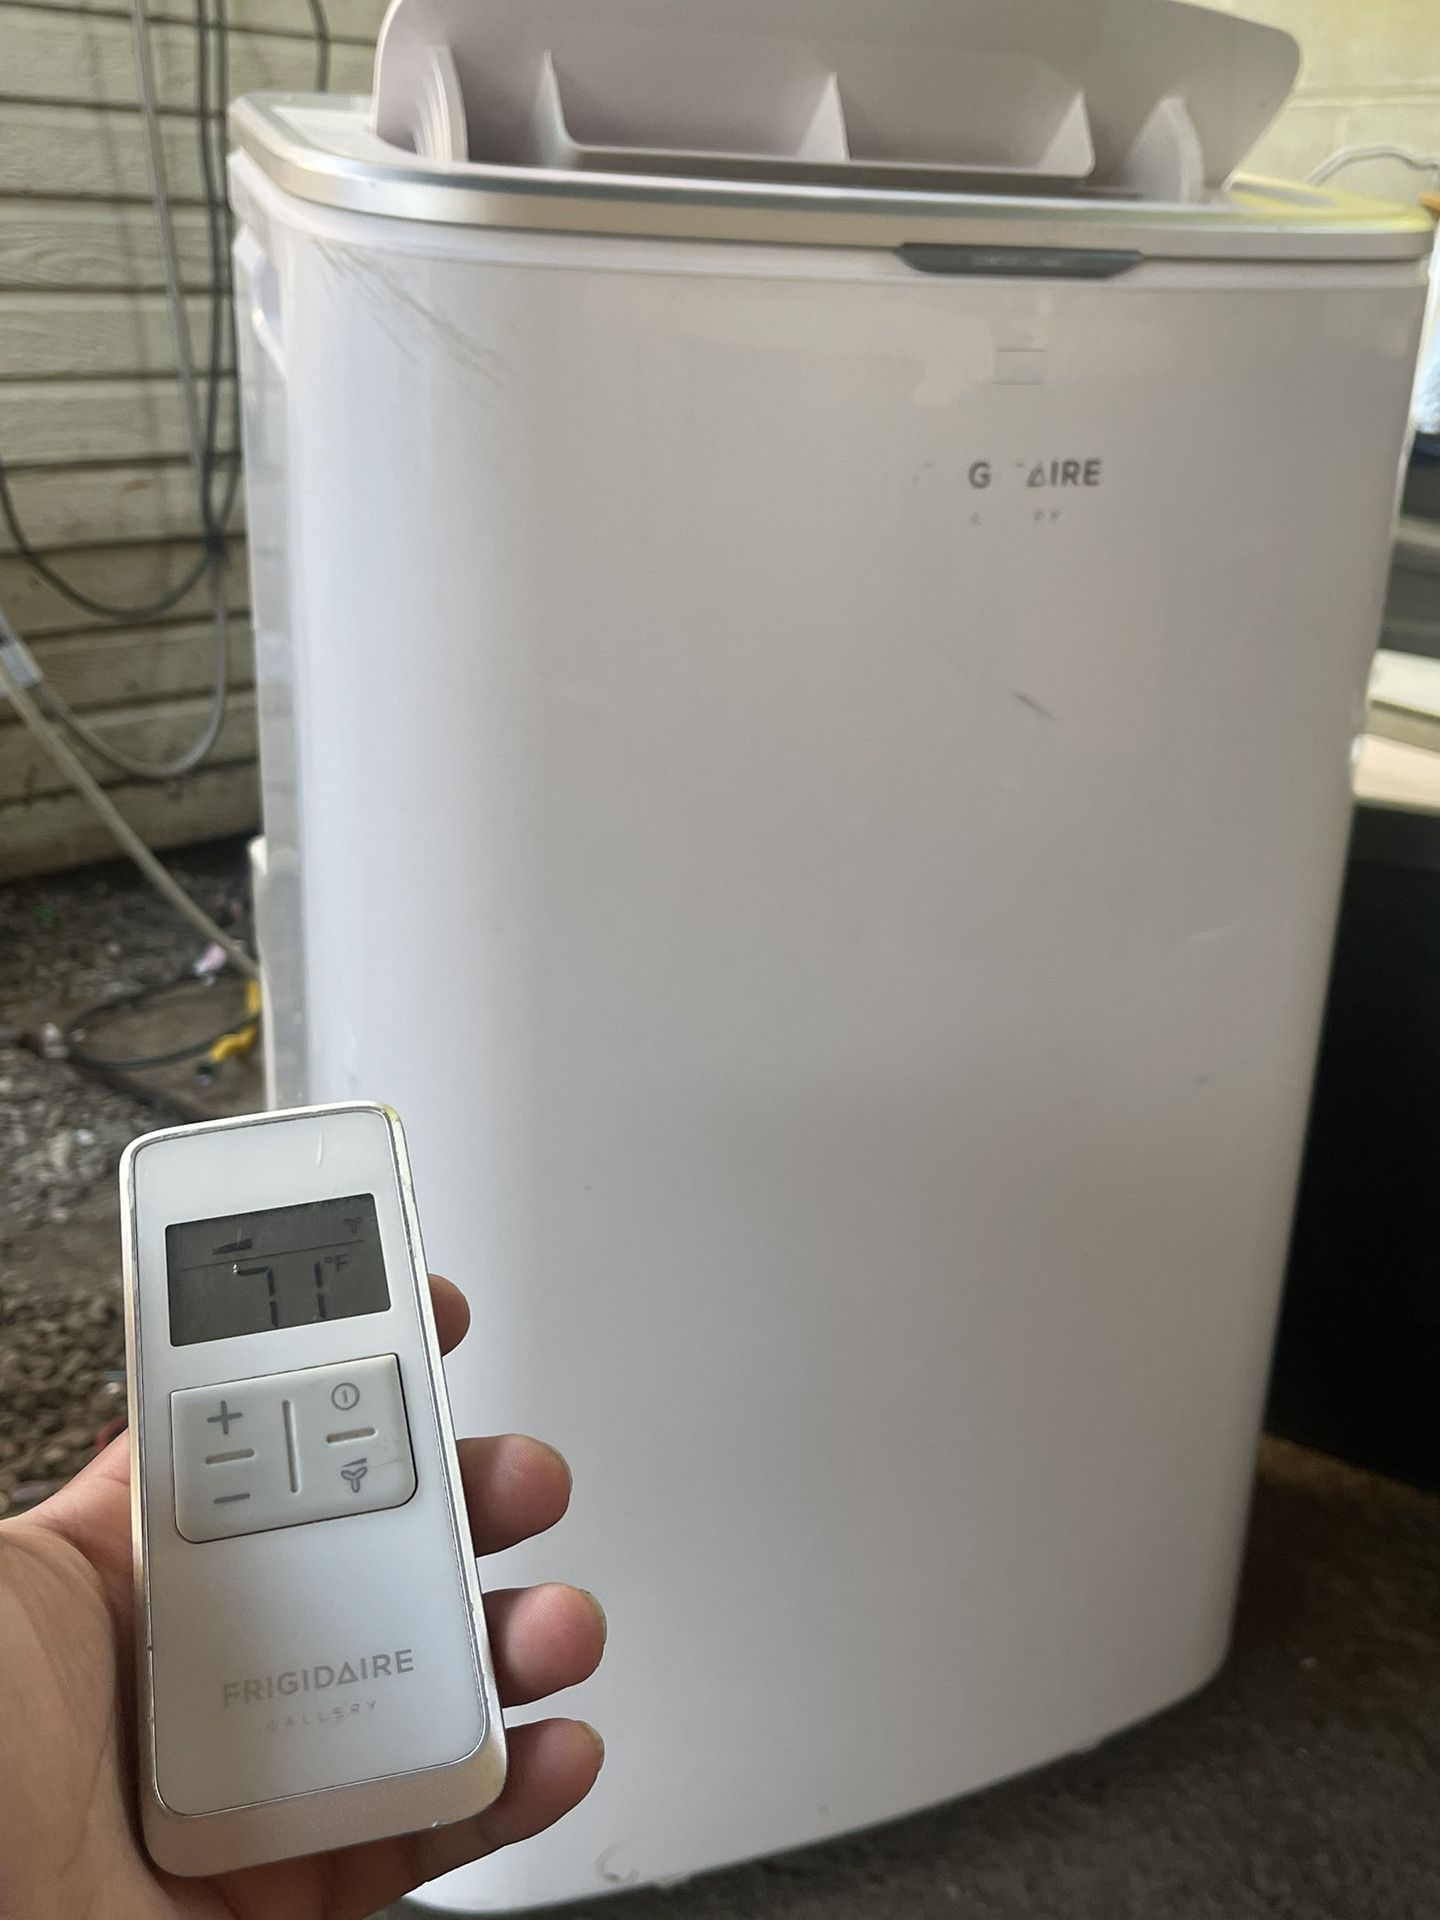 The Frigidaire Portable Air Conditioner